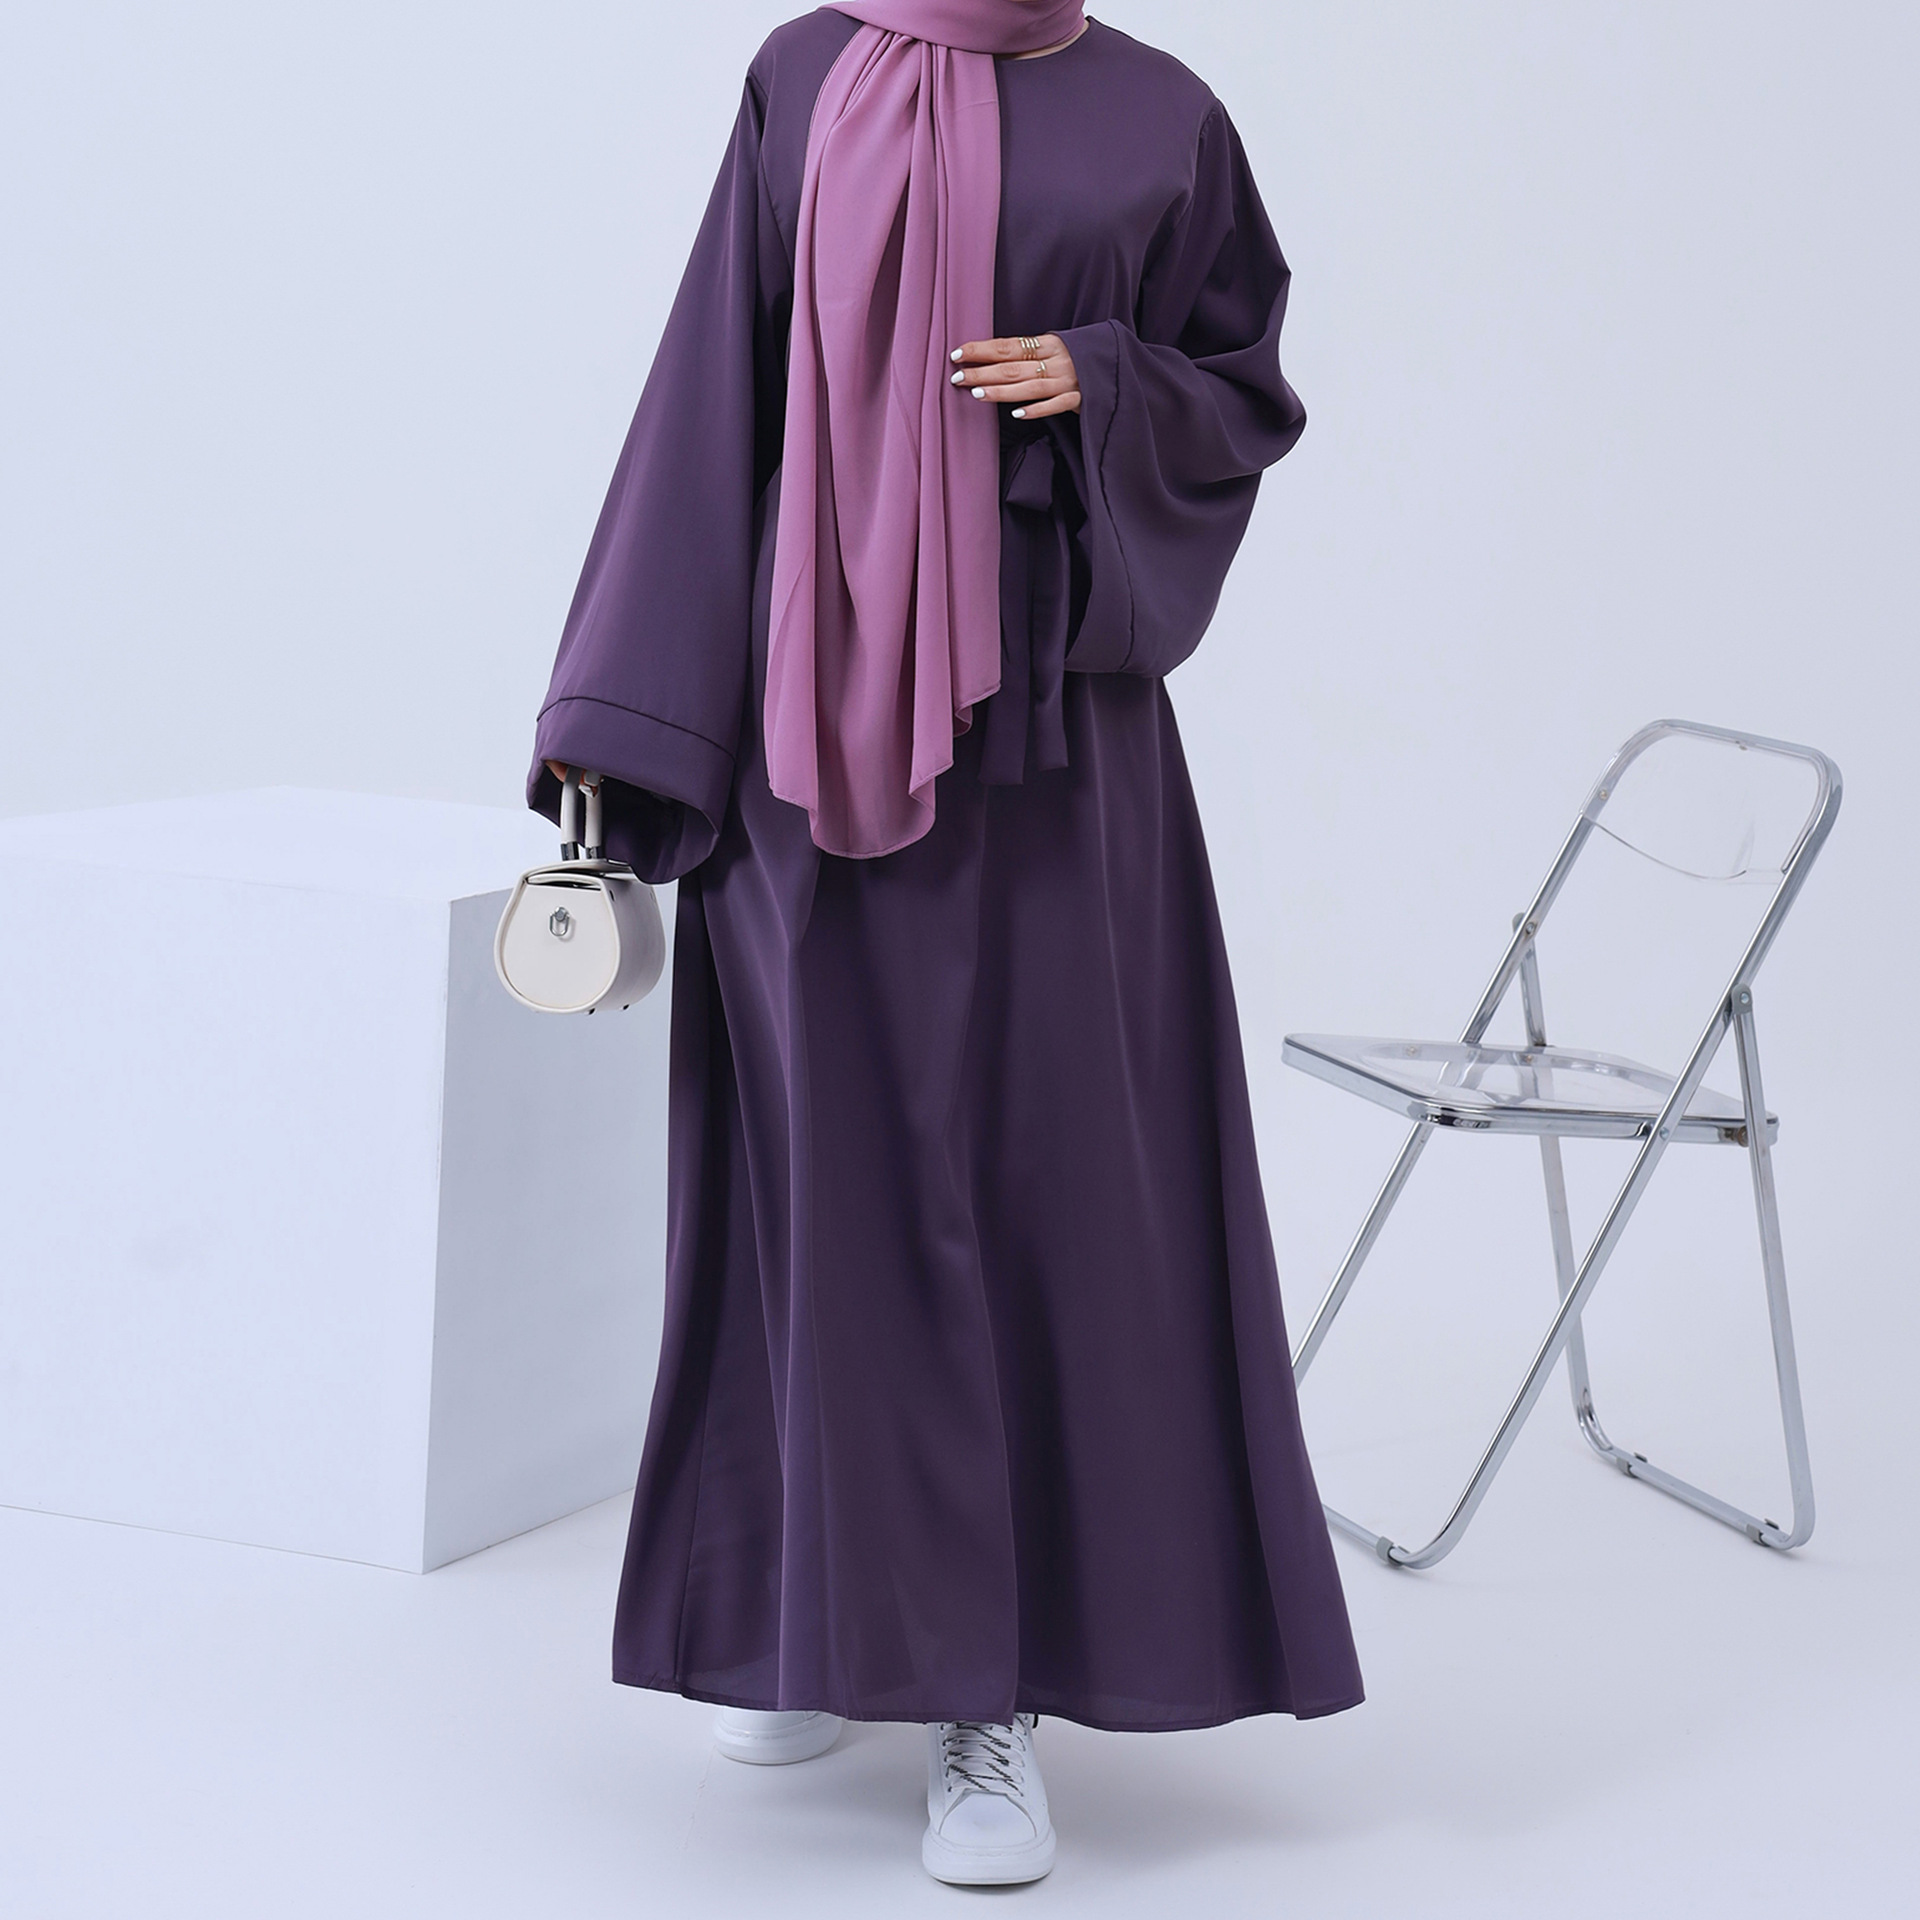 Loriya AliExpress Basic Style Middle East Turkey Solid Color plus Size Robe Dress Lr363